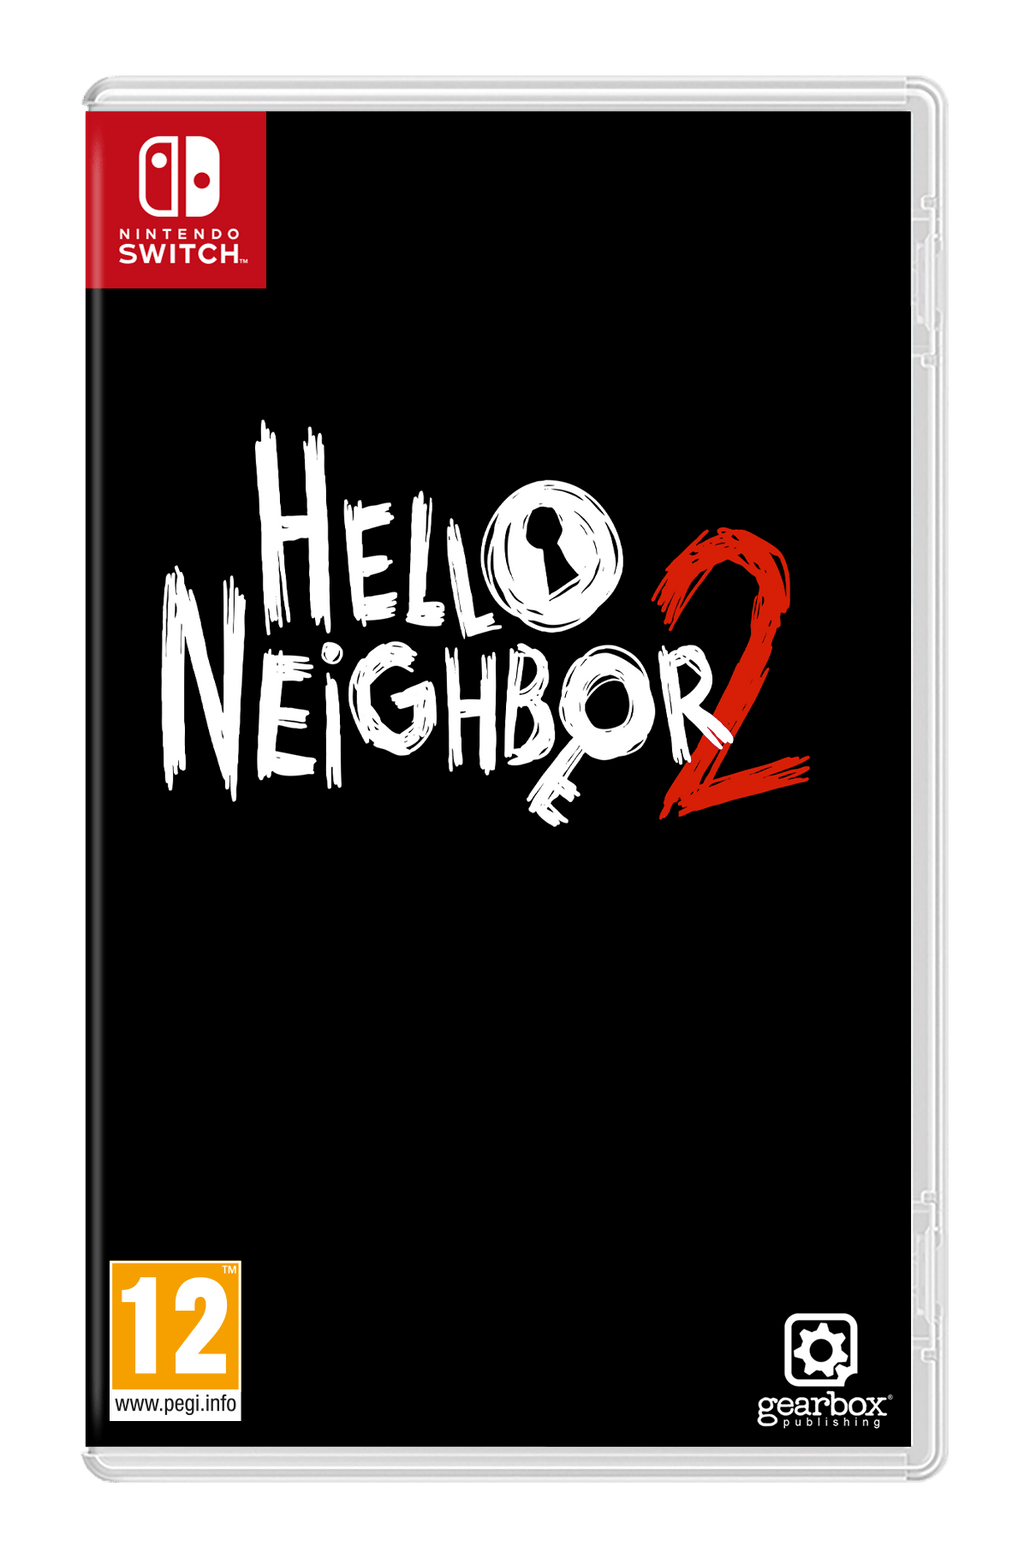 Hello Neighbor 2 (SWITCH) cheap - Price of $33.74